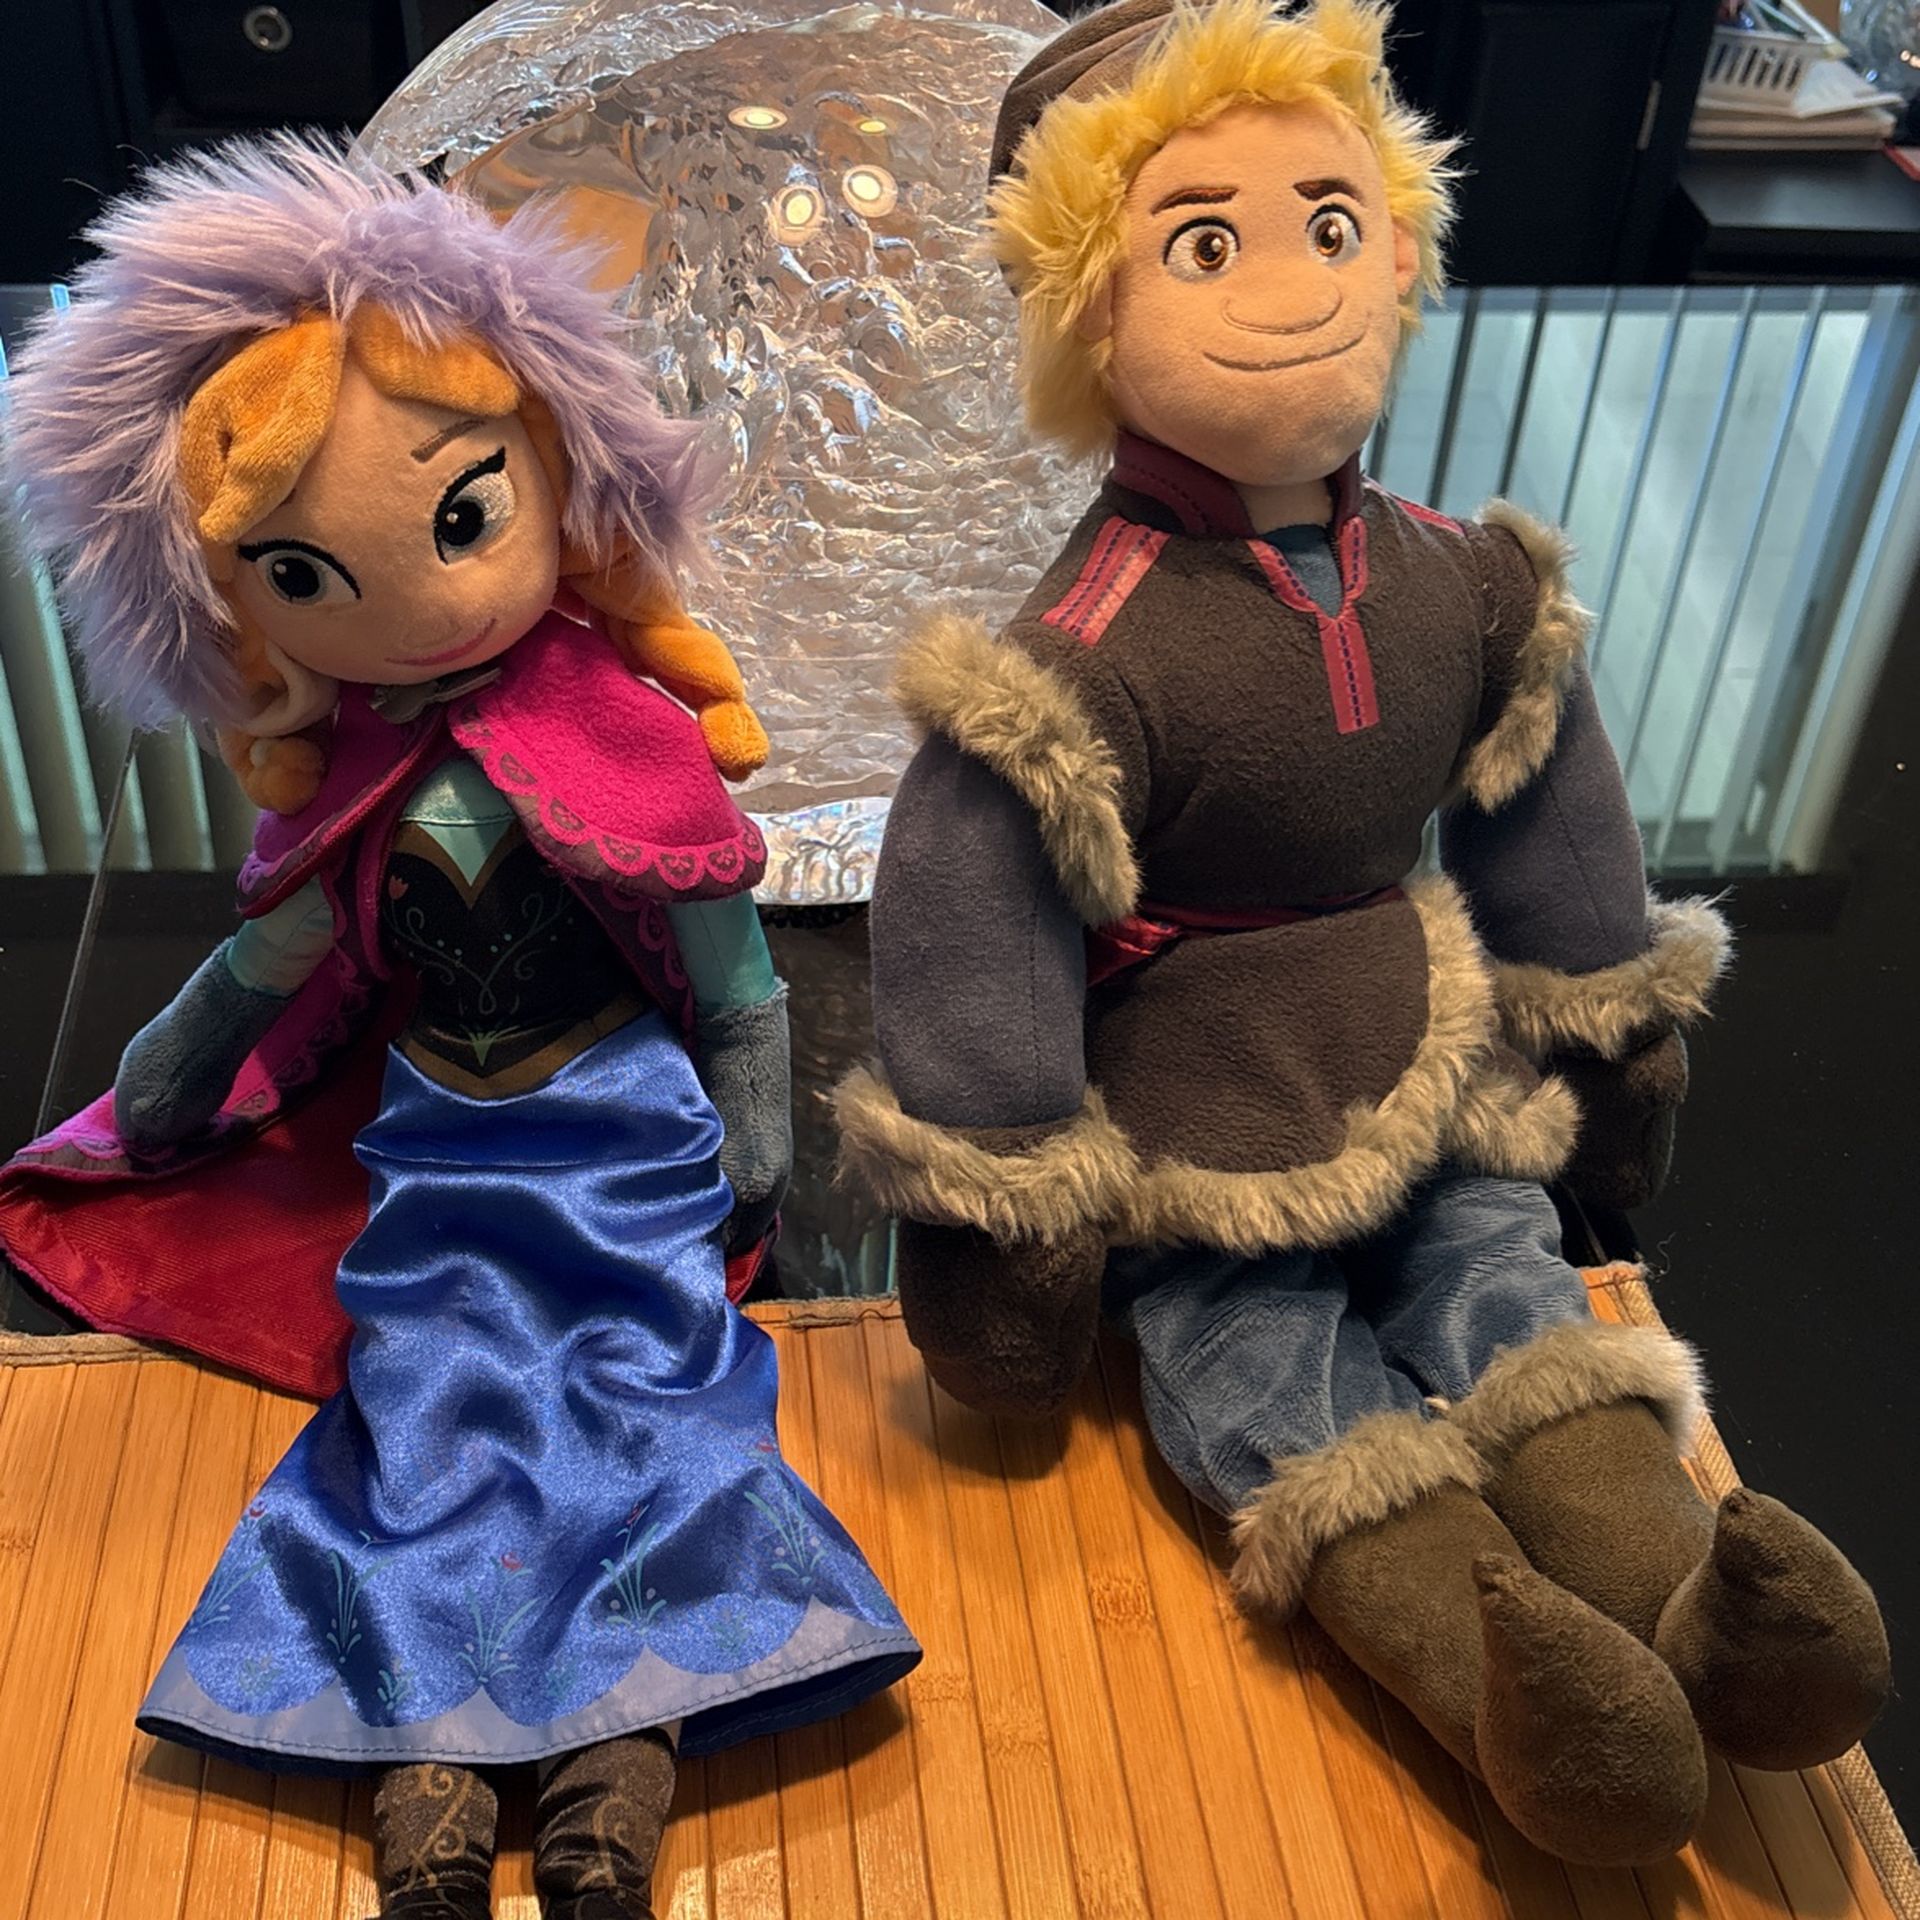 Disney Set Plush Toy From Frozen